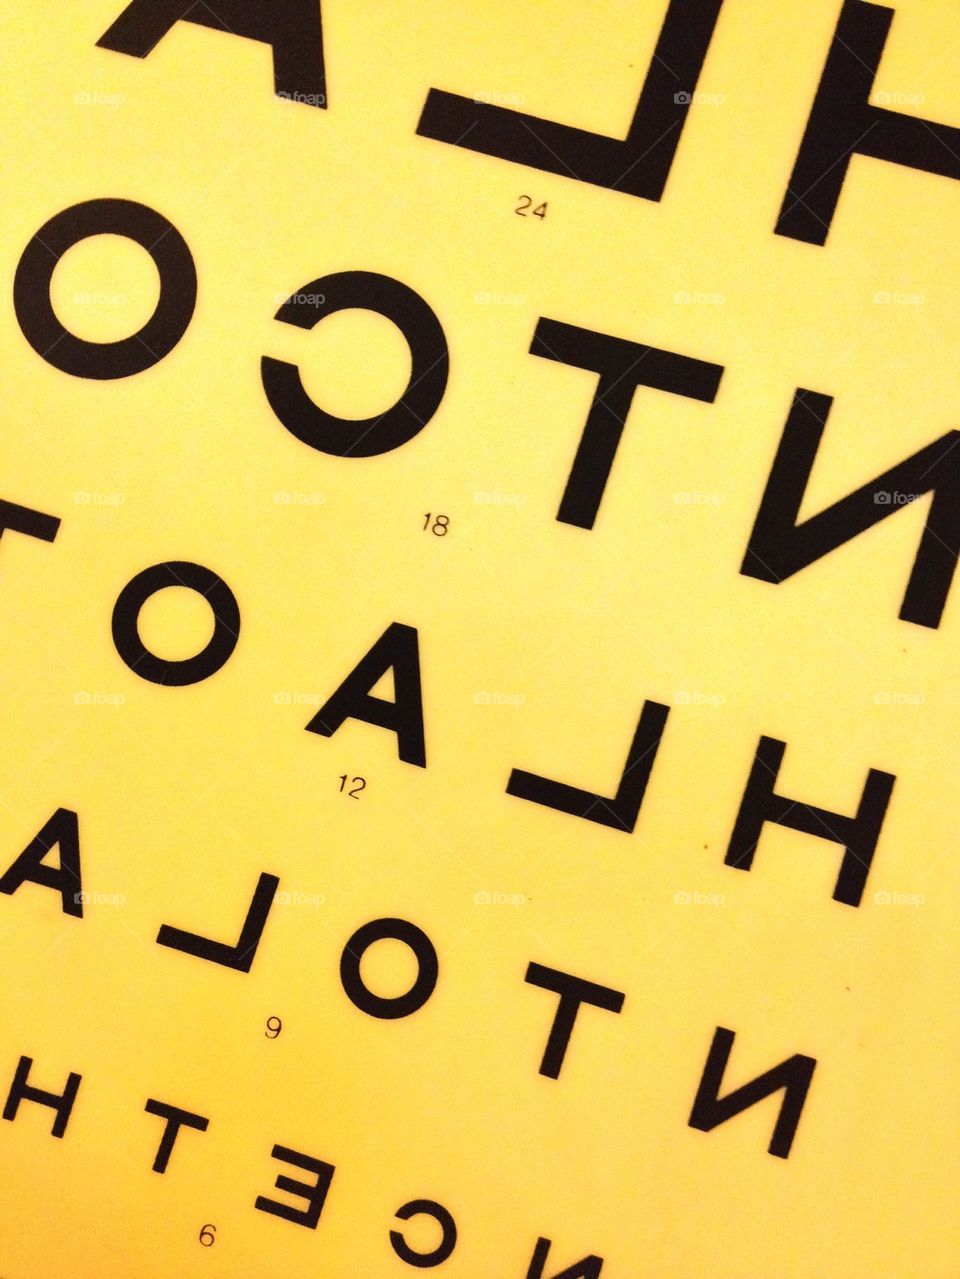 Opticians reading card